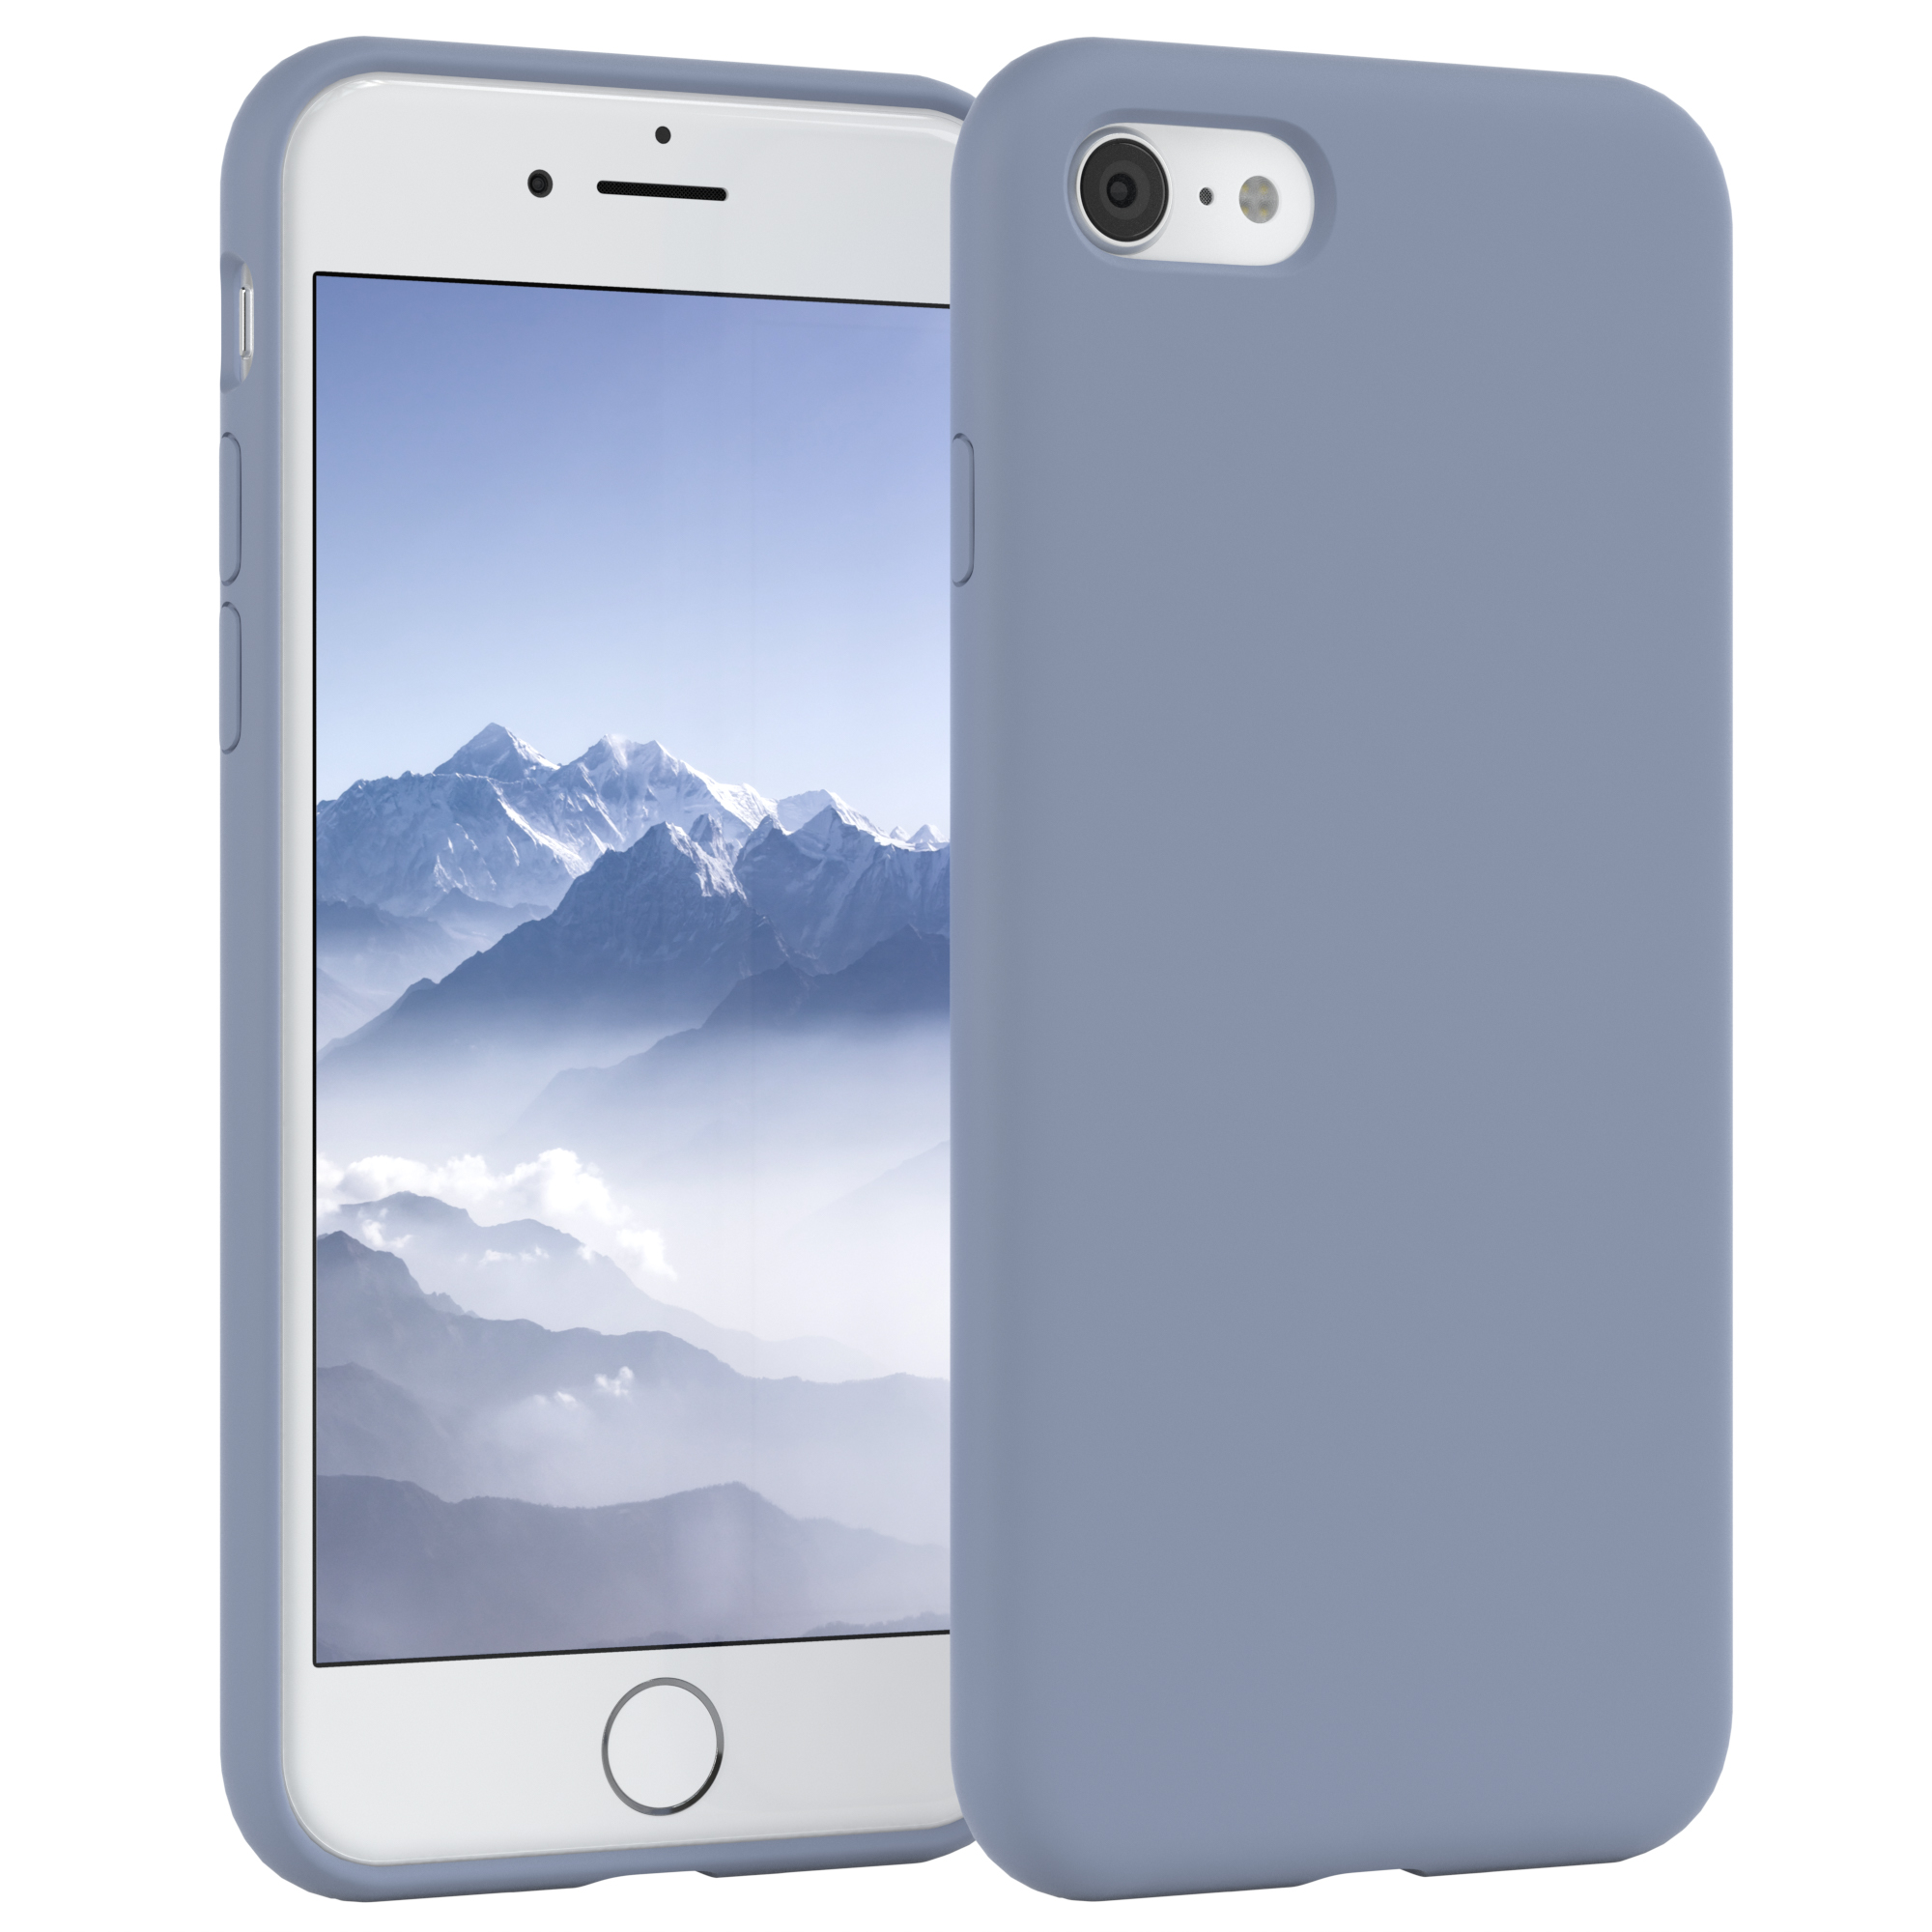 EAZY 2020, Apple, SE 8, iPhone Blau / iPhone Premium CASE Eis Handycase, Backcover, 2022 7 Silikon SE /